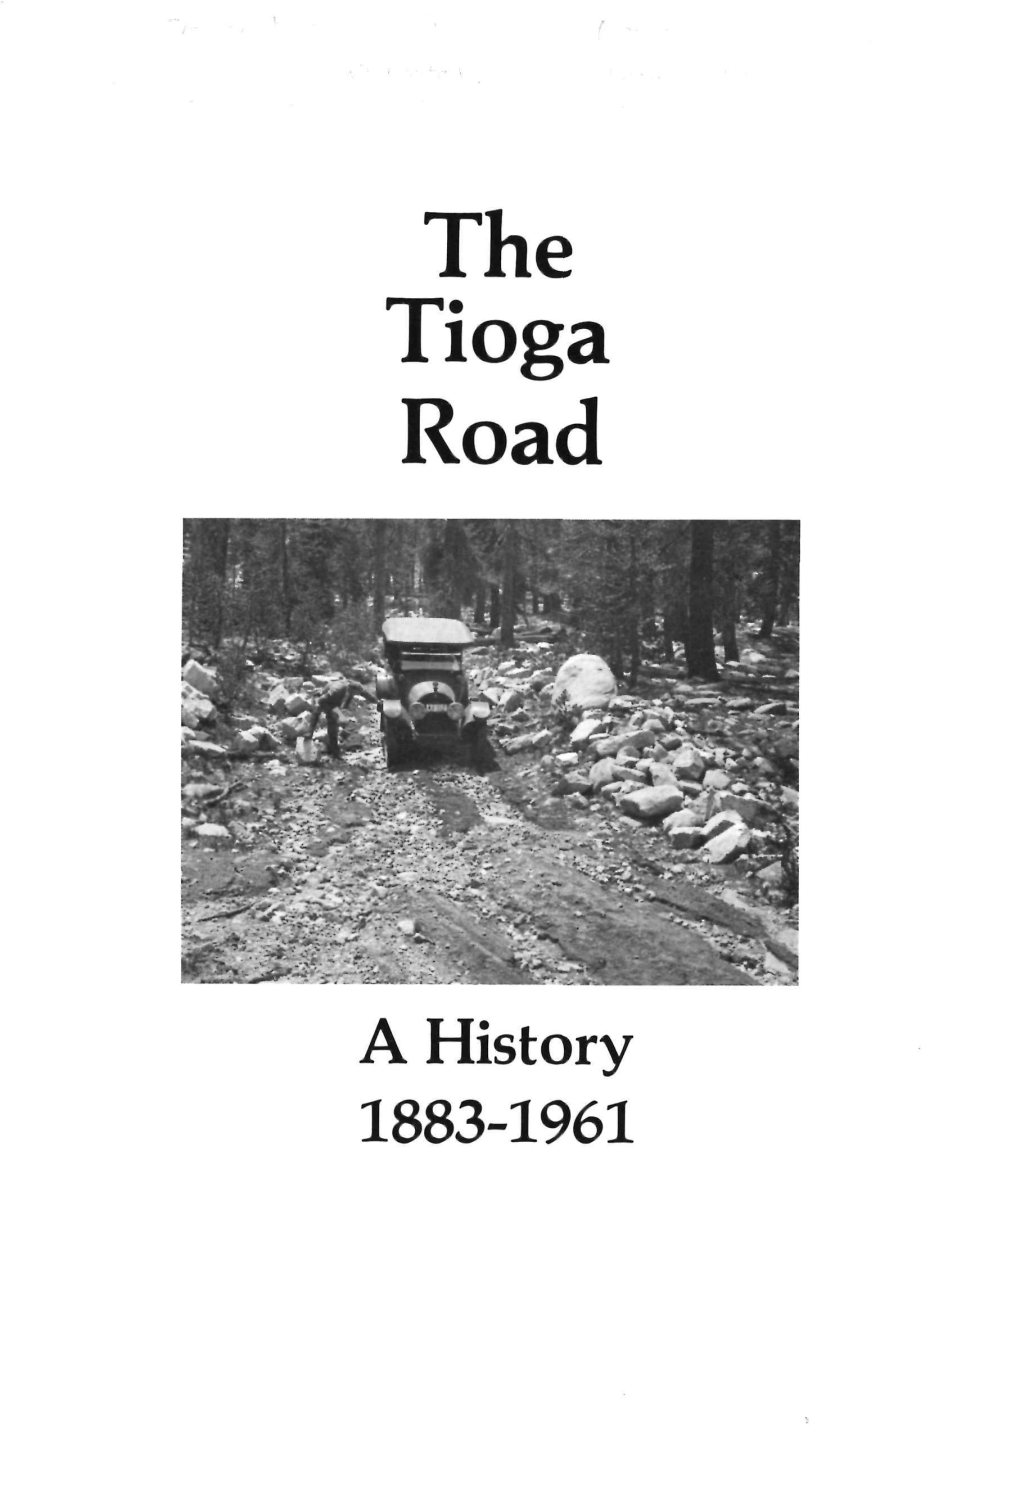 The Tioga Road